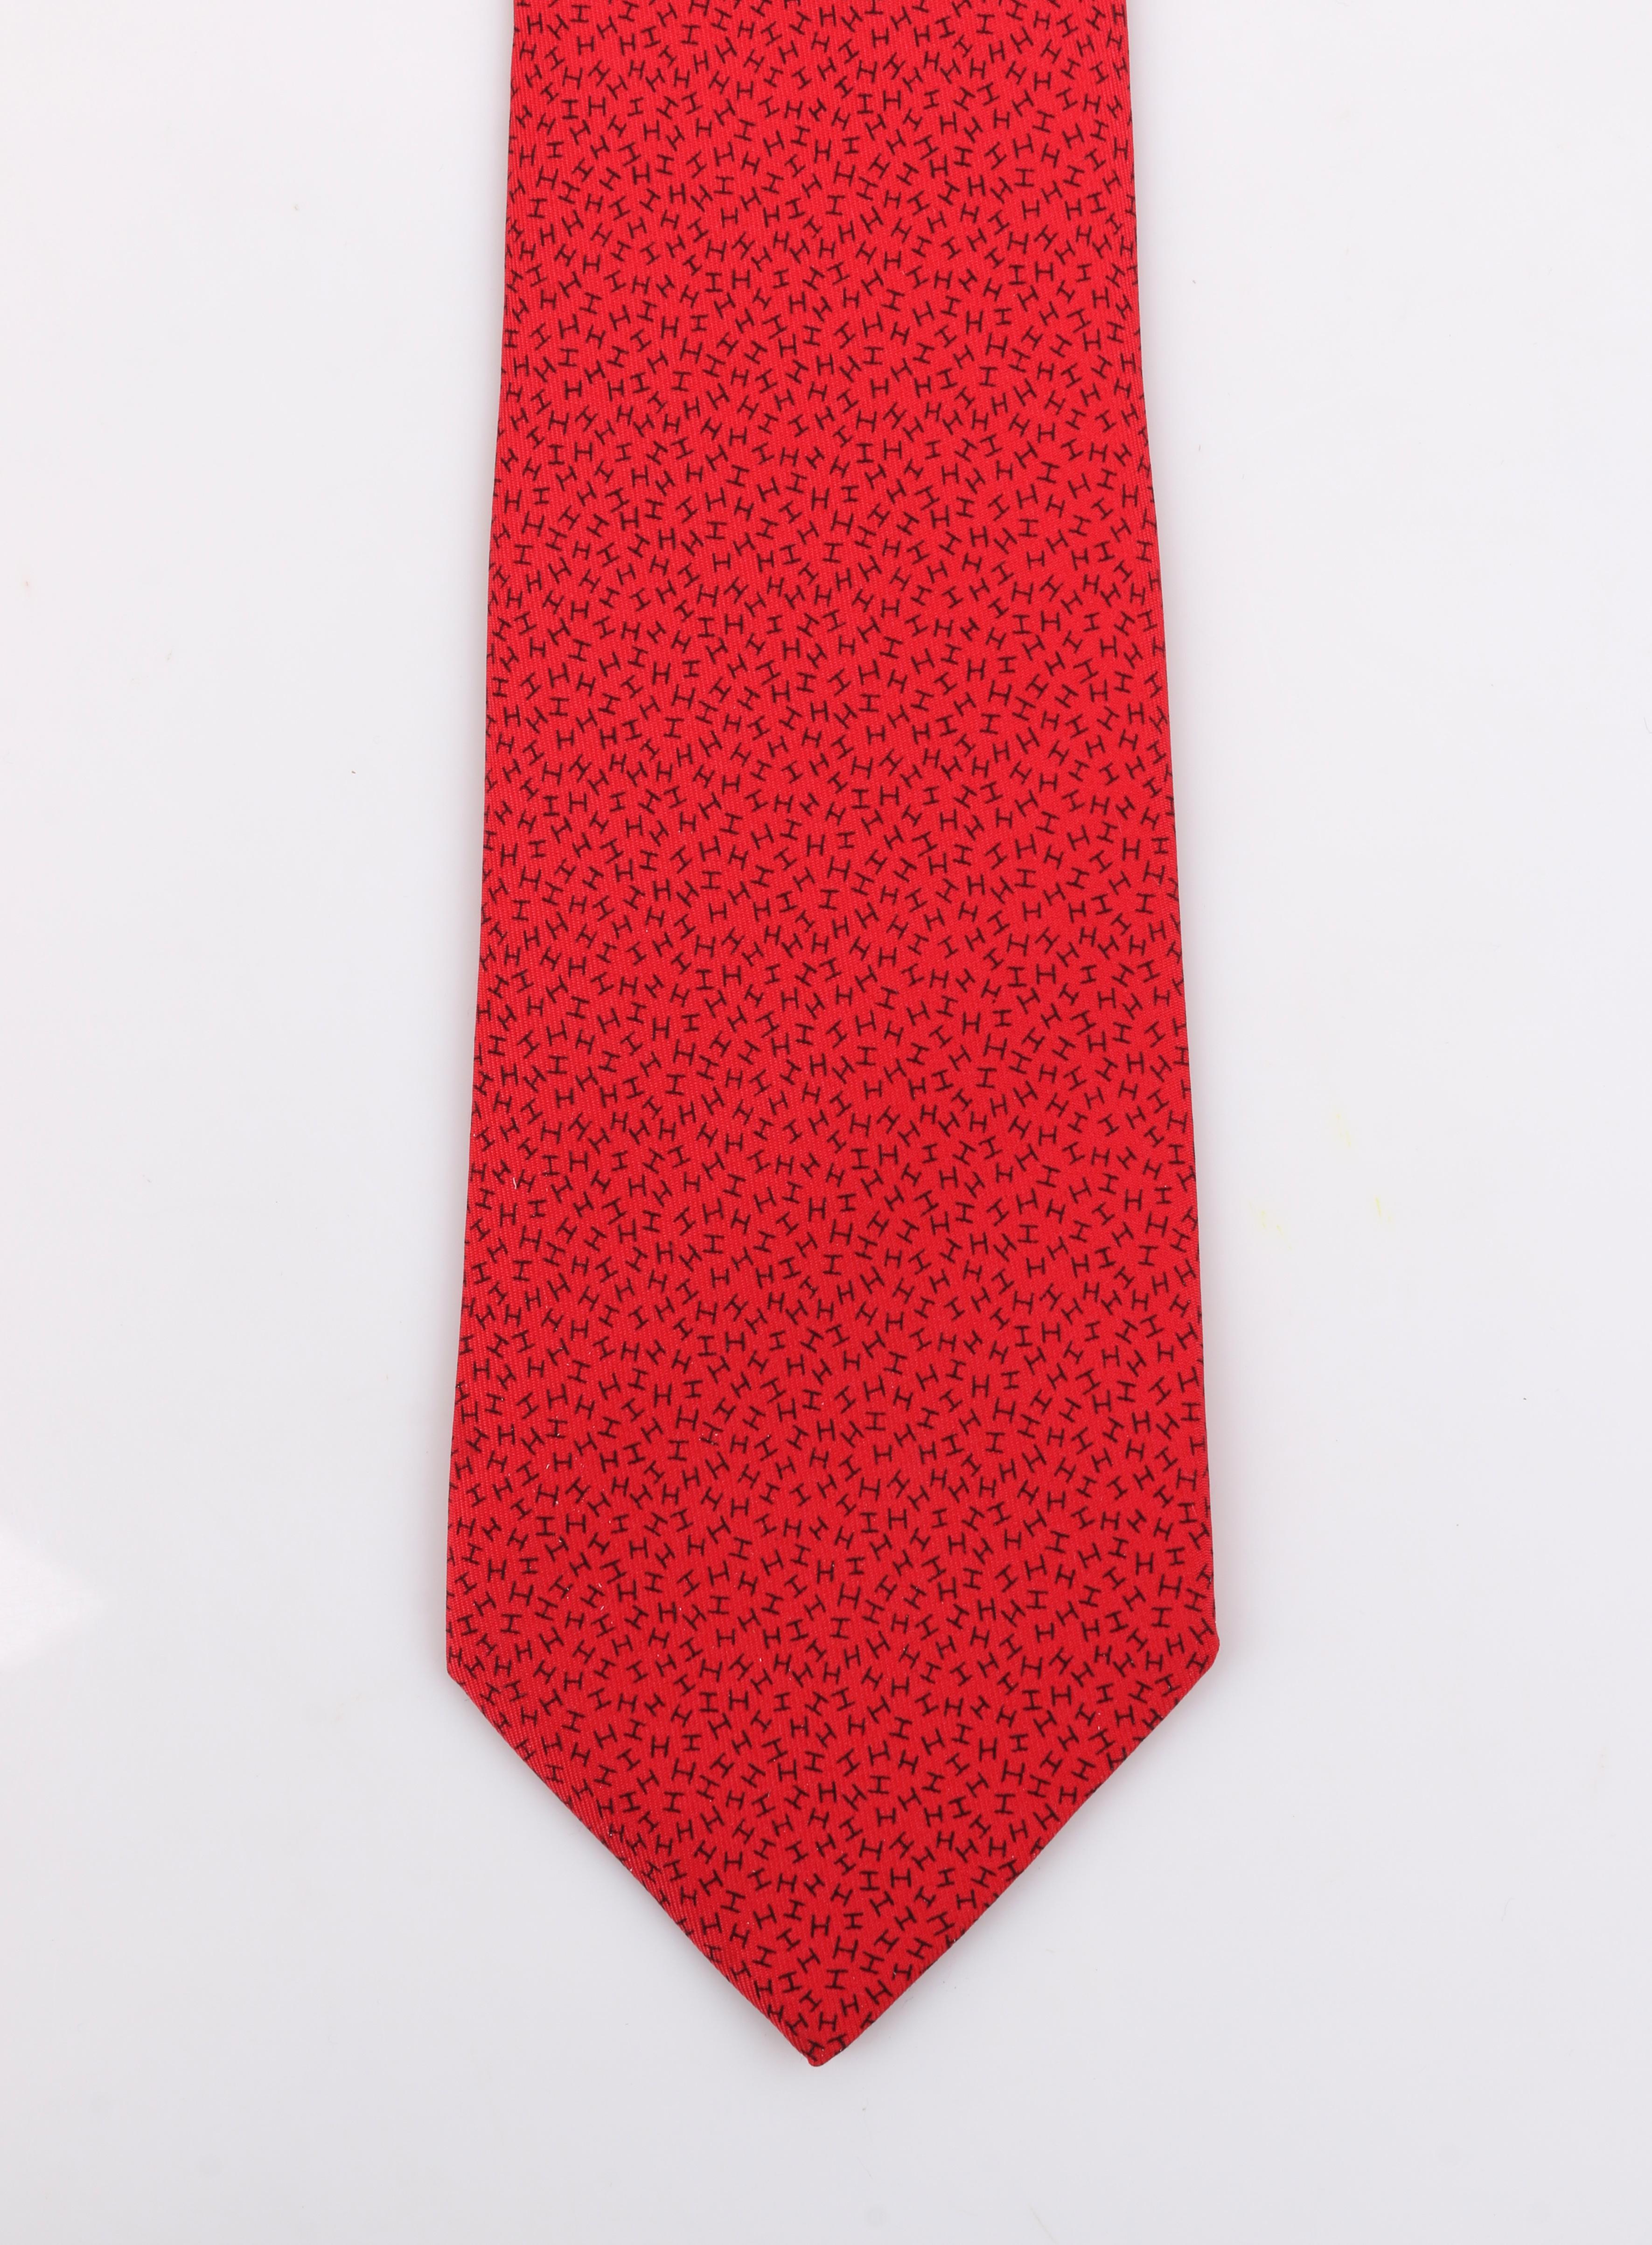 HERMES Red & Black H Monogram Print 5 Fold Silk Necktie Tie 7926 MA 1